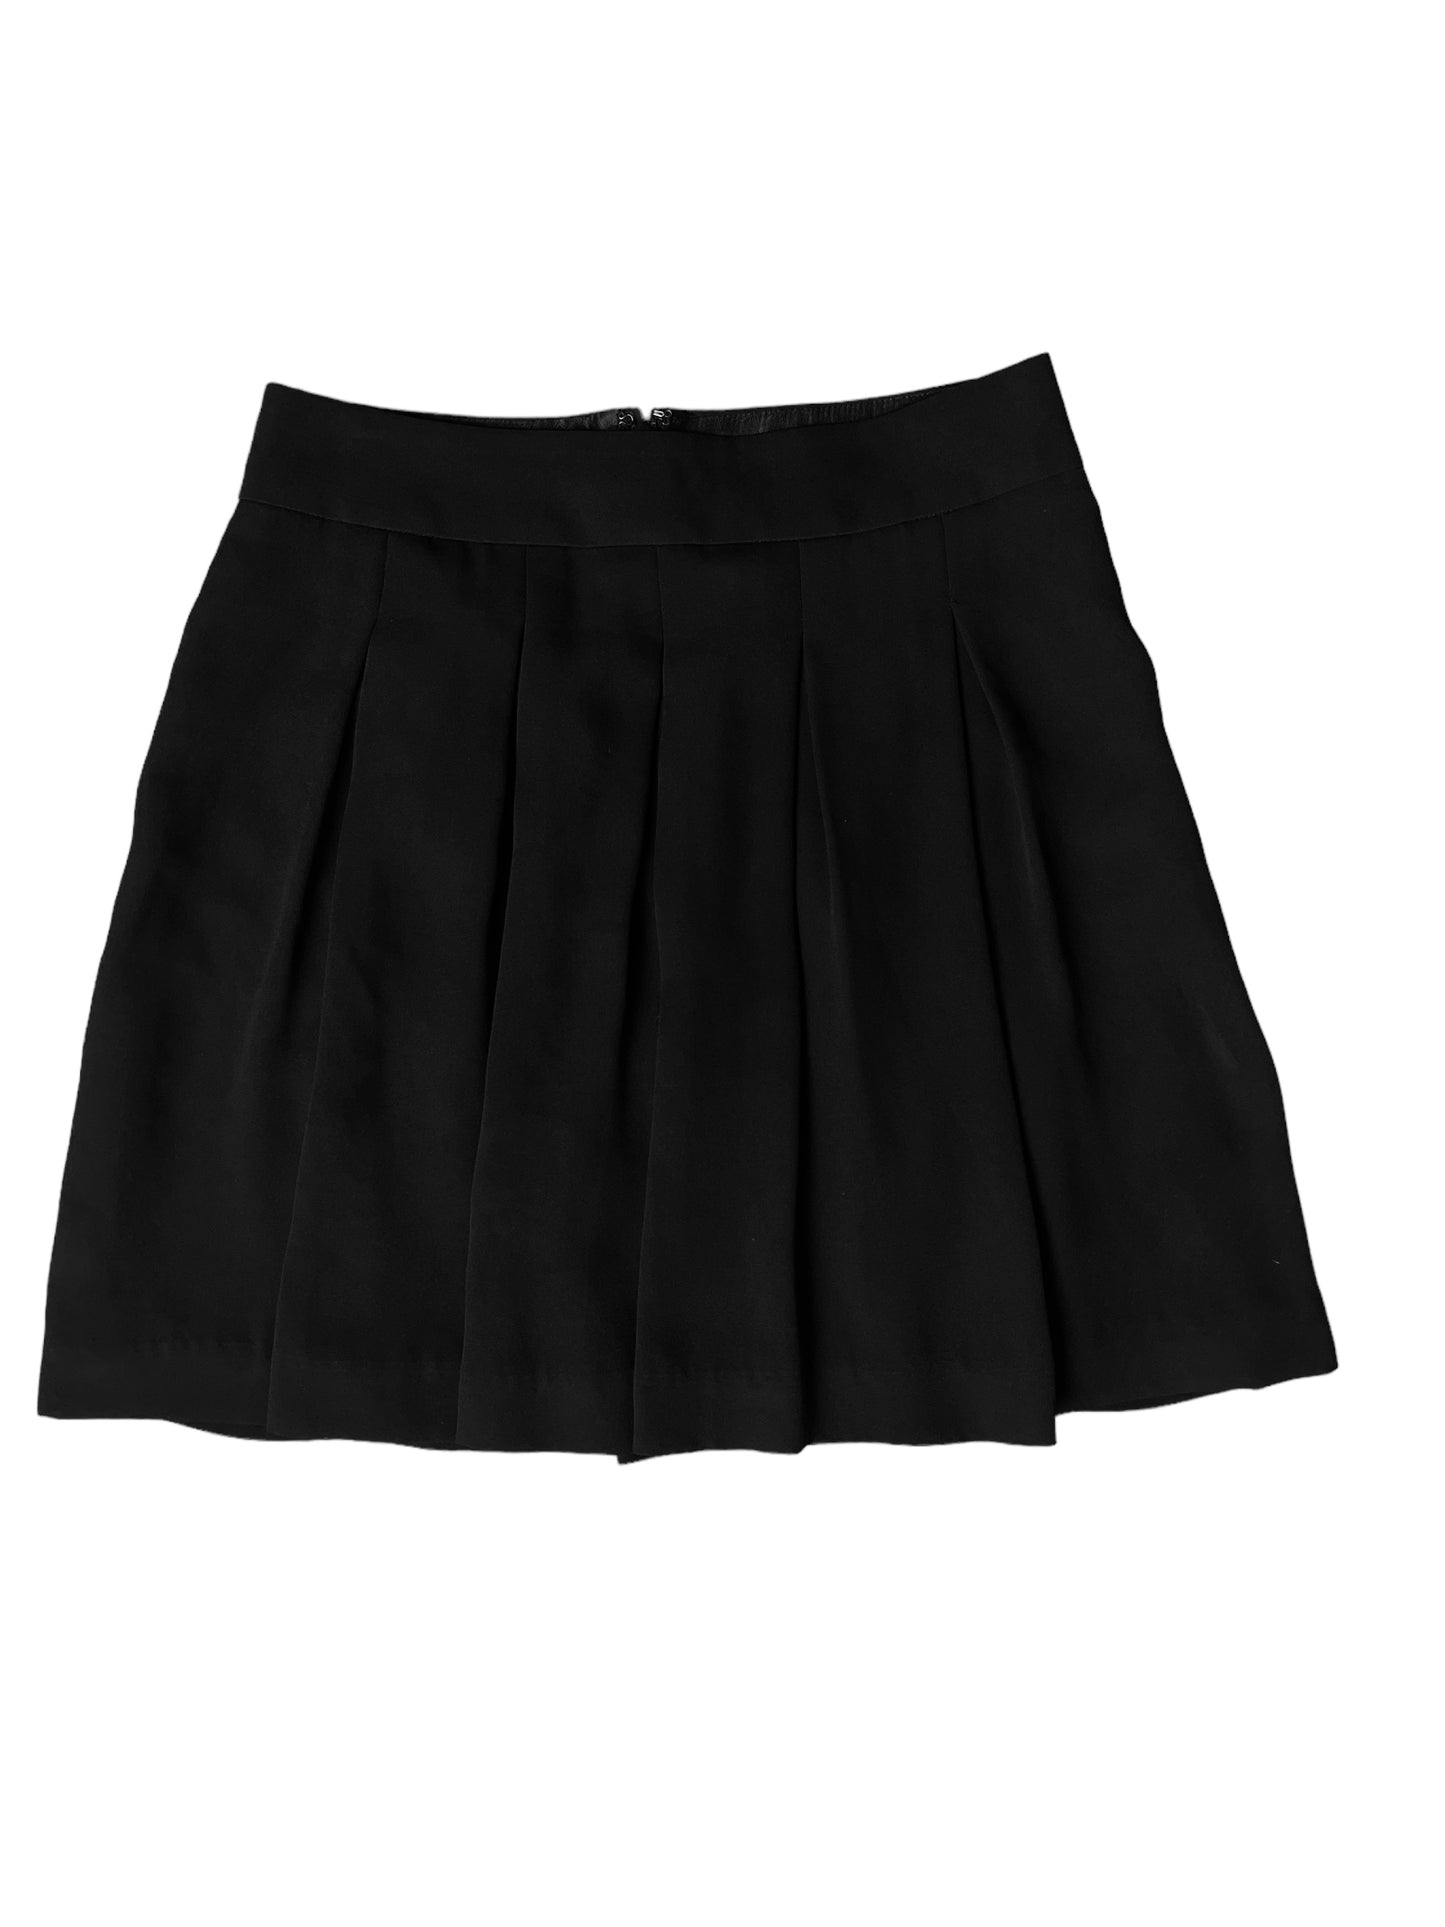 Banana Republic Black Pleated Formal Skirt Size 0